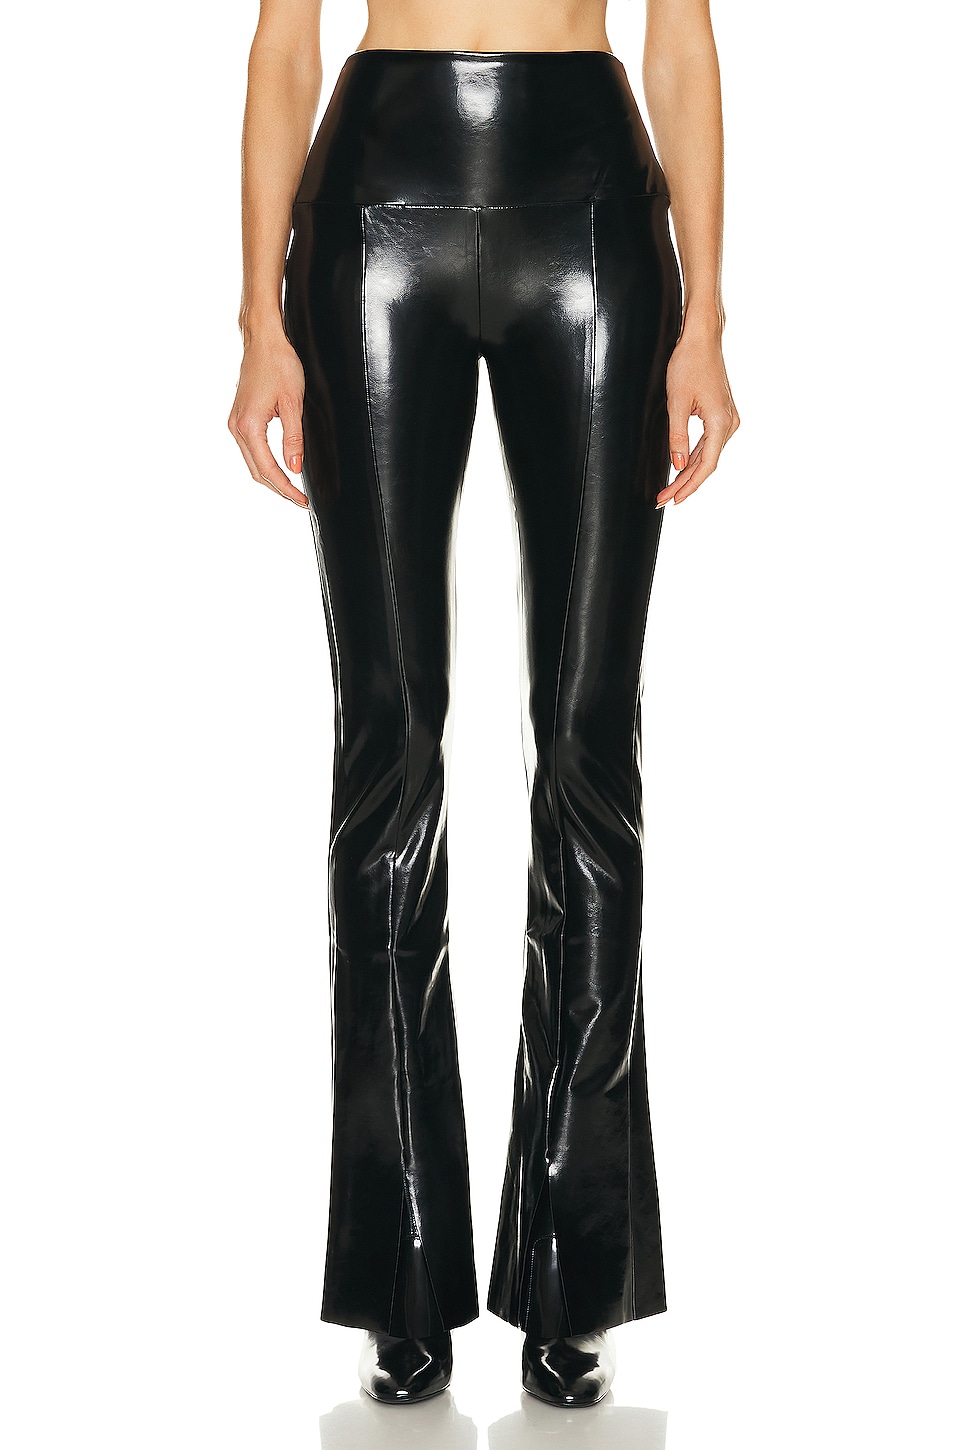 Norma Kamali Faux Leather Spat Legging in Black | FWRD